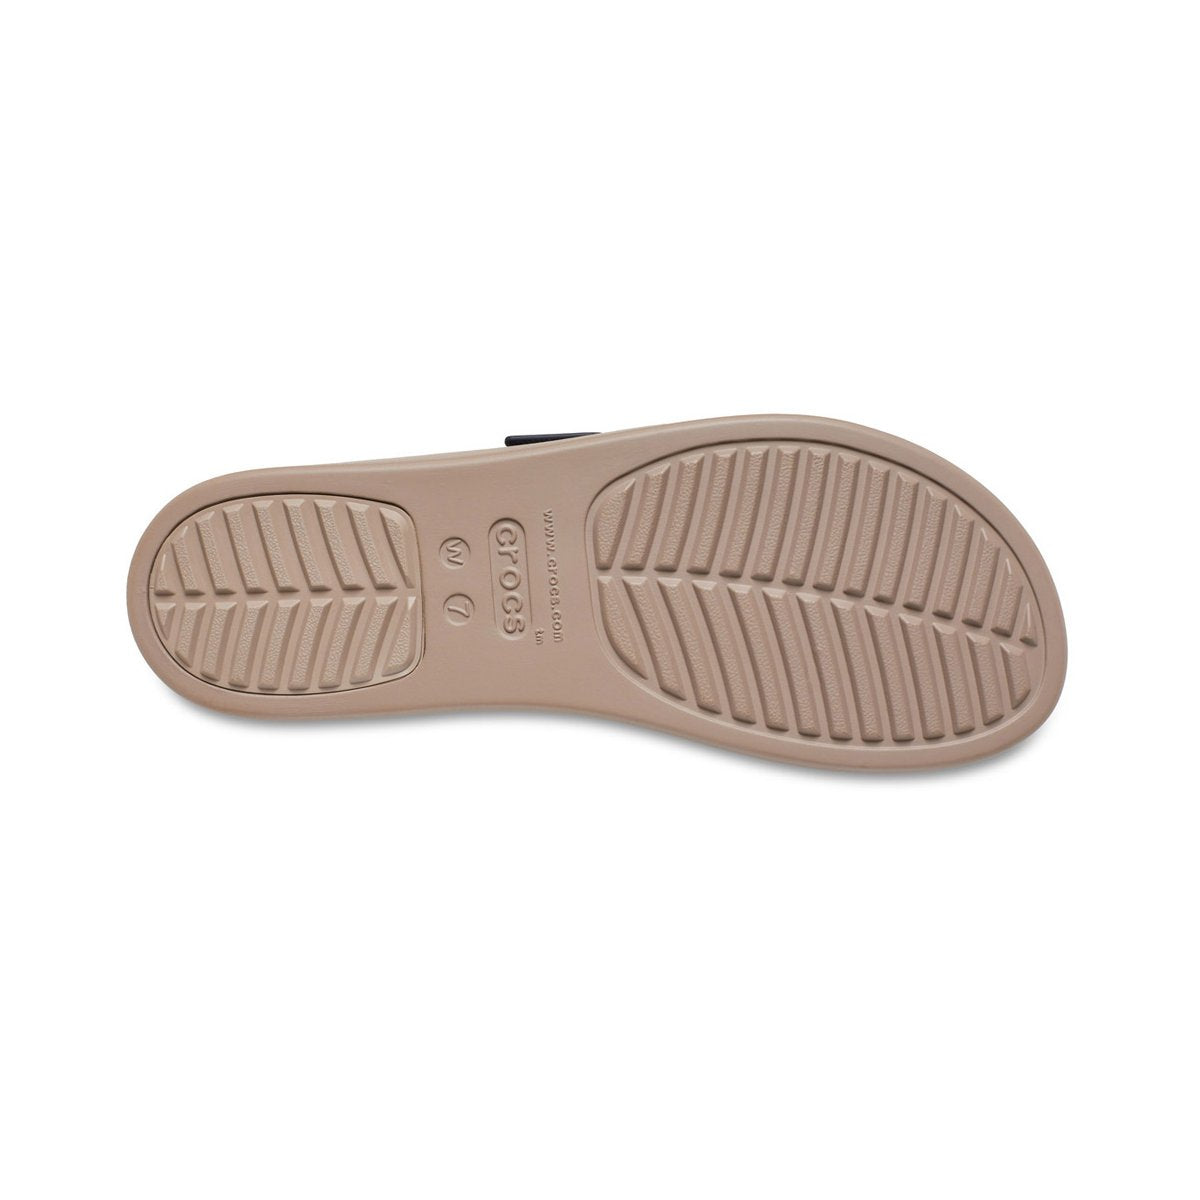 Crocs sandalo da donna con zeppa Brooklyn Buckle Low Wedge W 207431-4LH deep navy